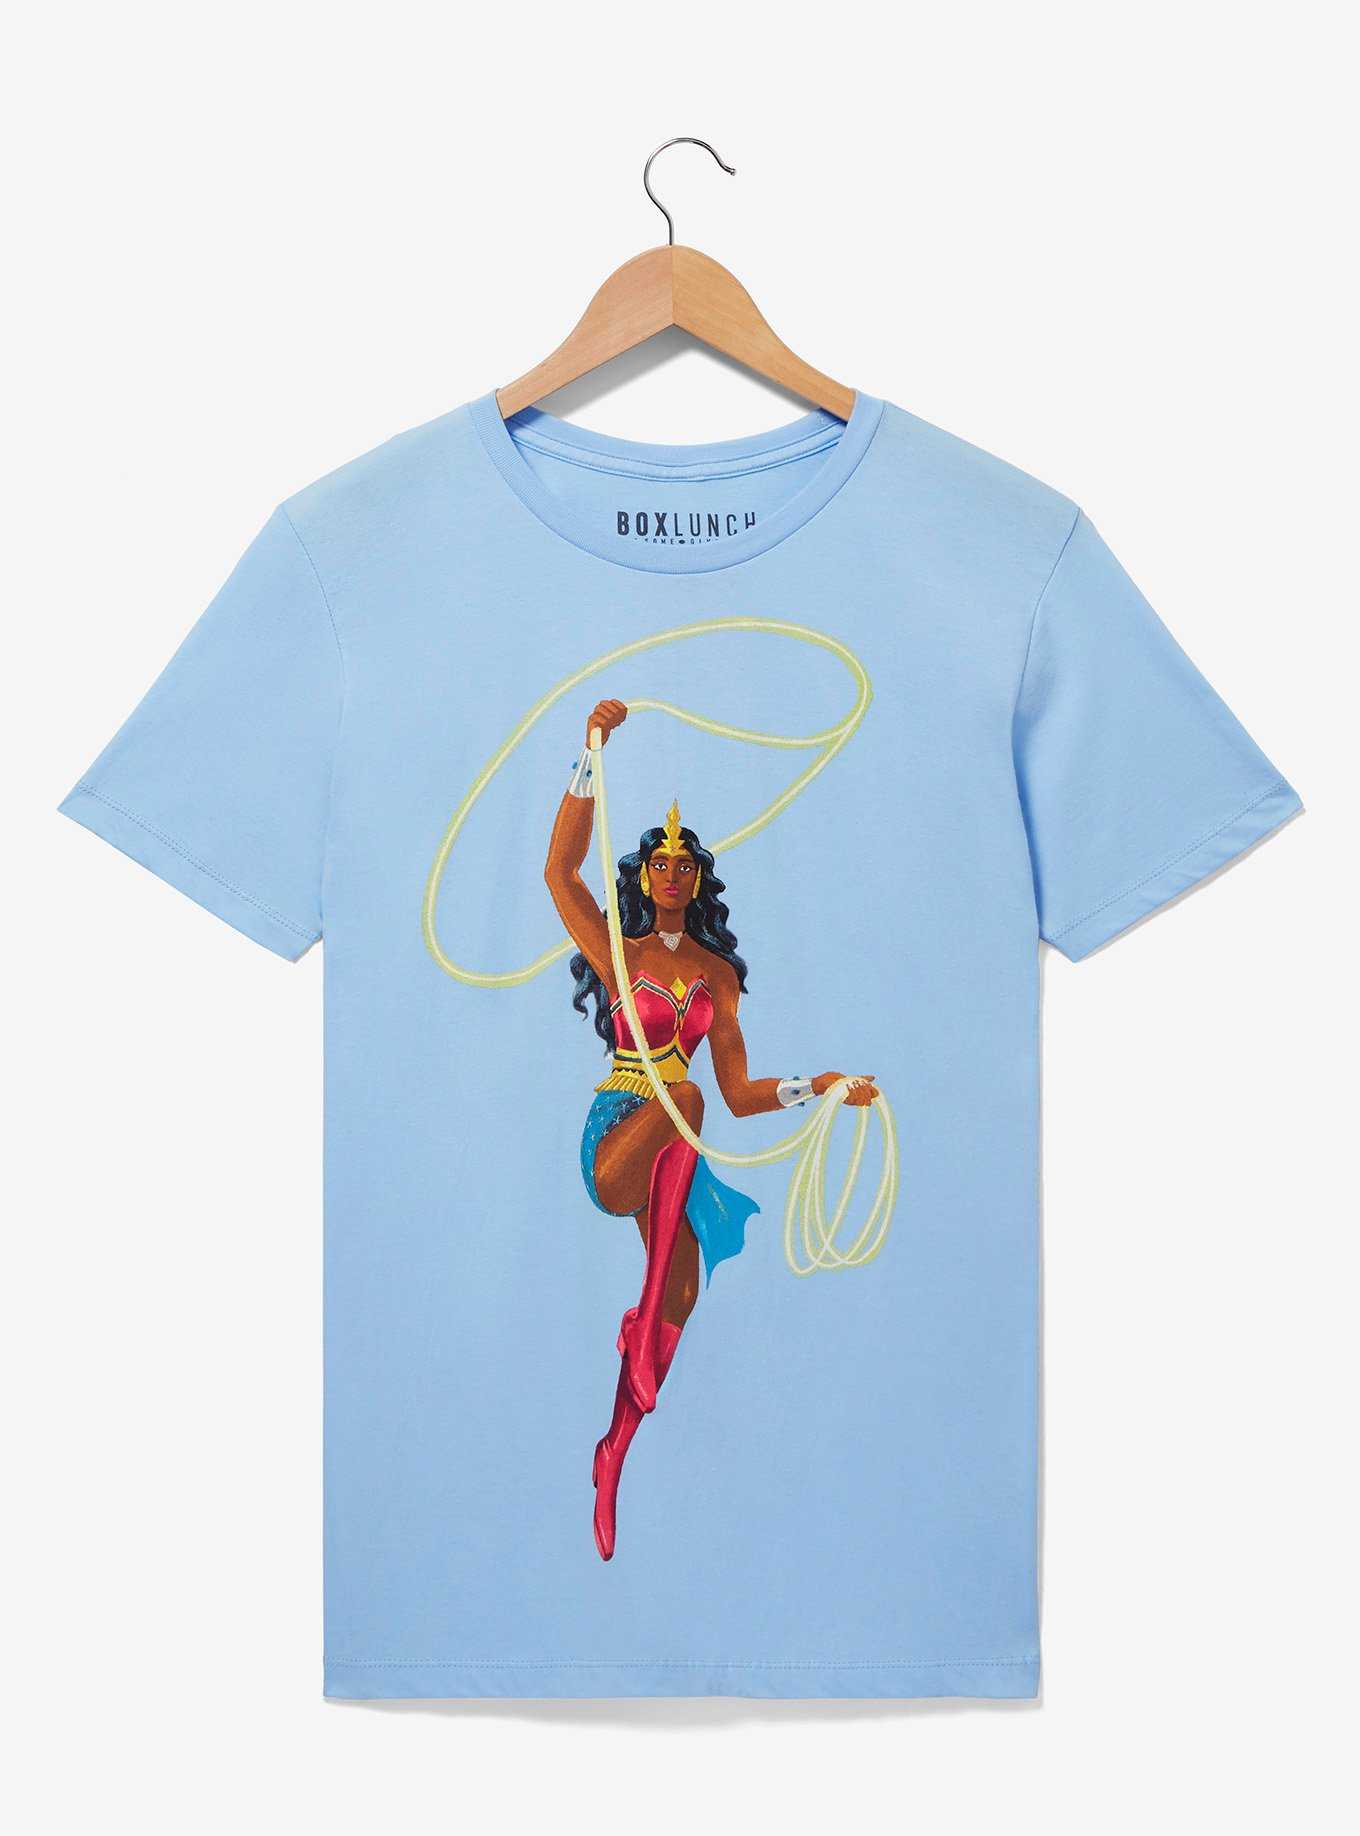 Warner Bros. 100th Anniversary DC Comics Wonder Woman Portrait Women's T-Shirt - BoxLunch Exclusive, , hi-res